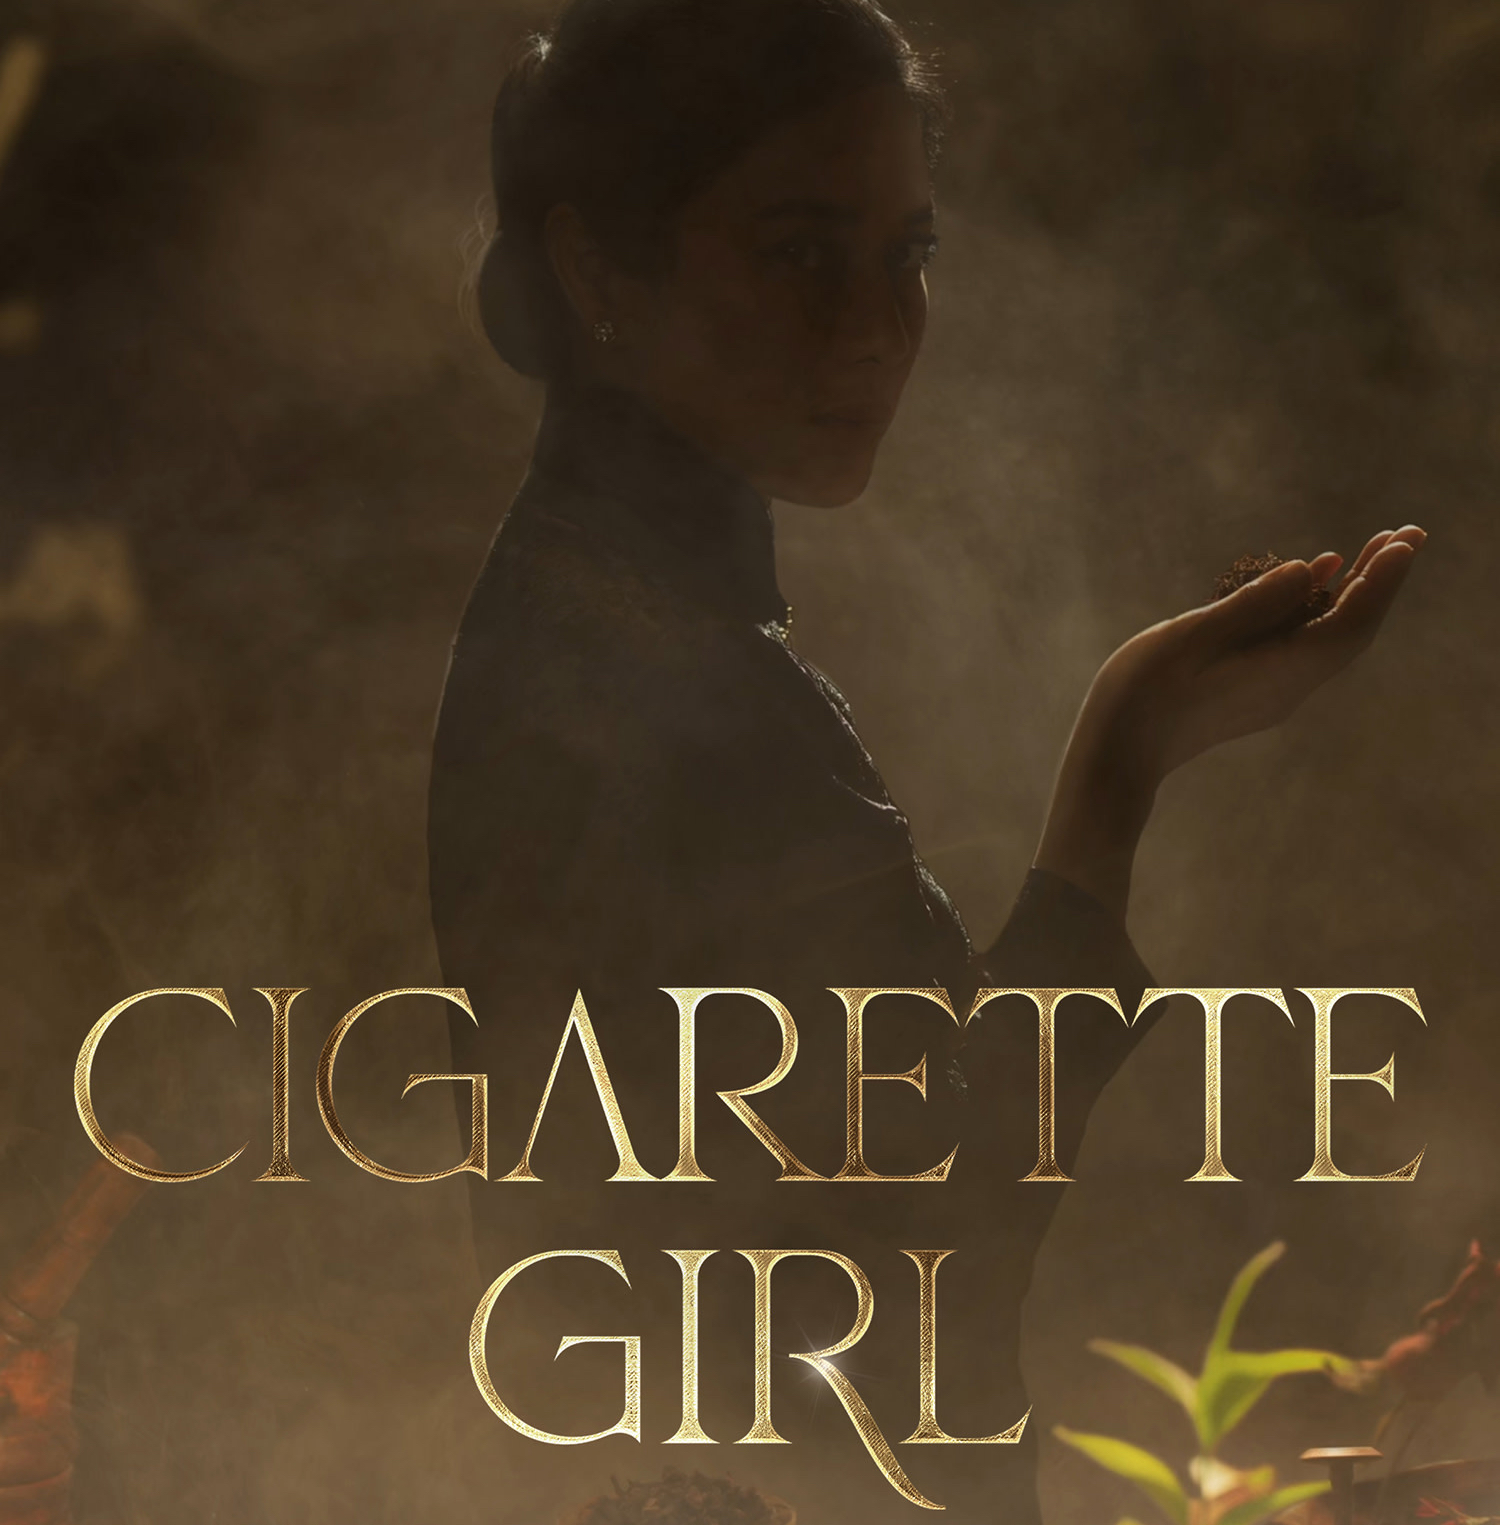 Video: "Cigarette Girl" - Official Trailer - Netflix